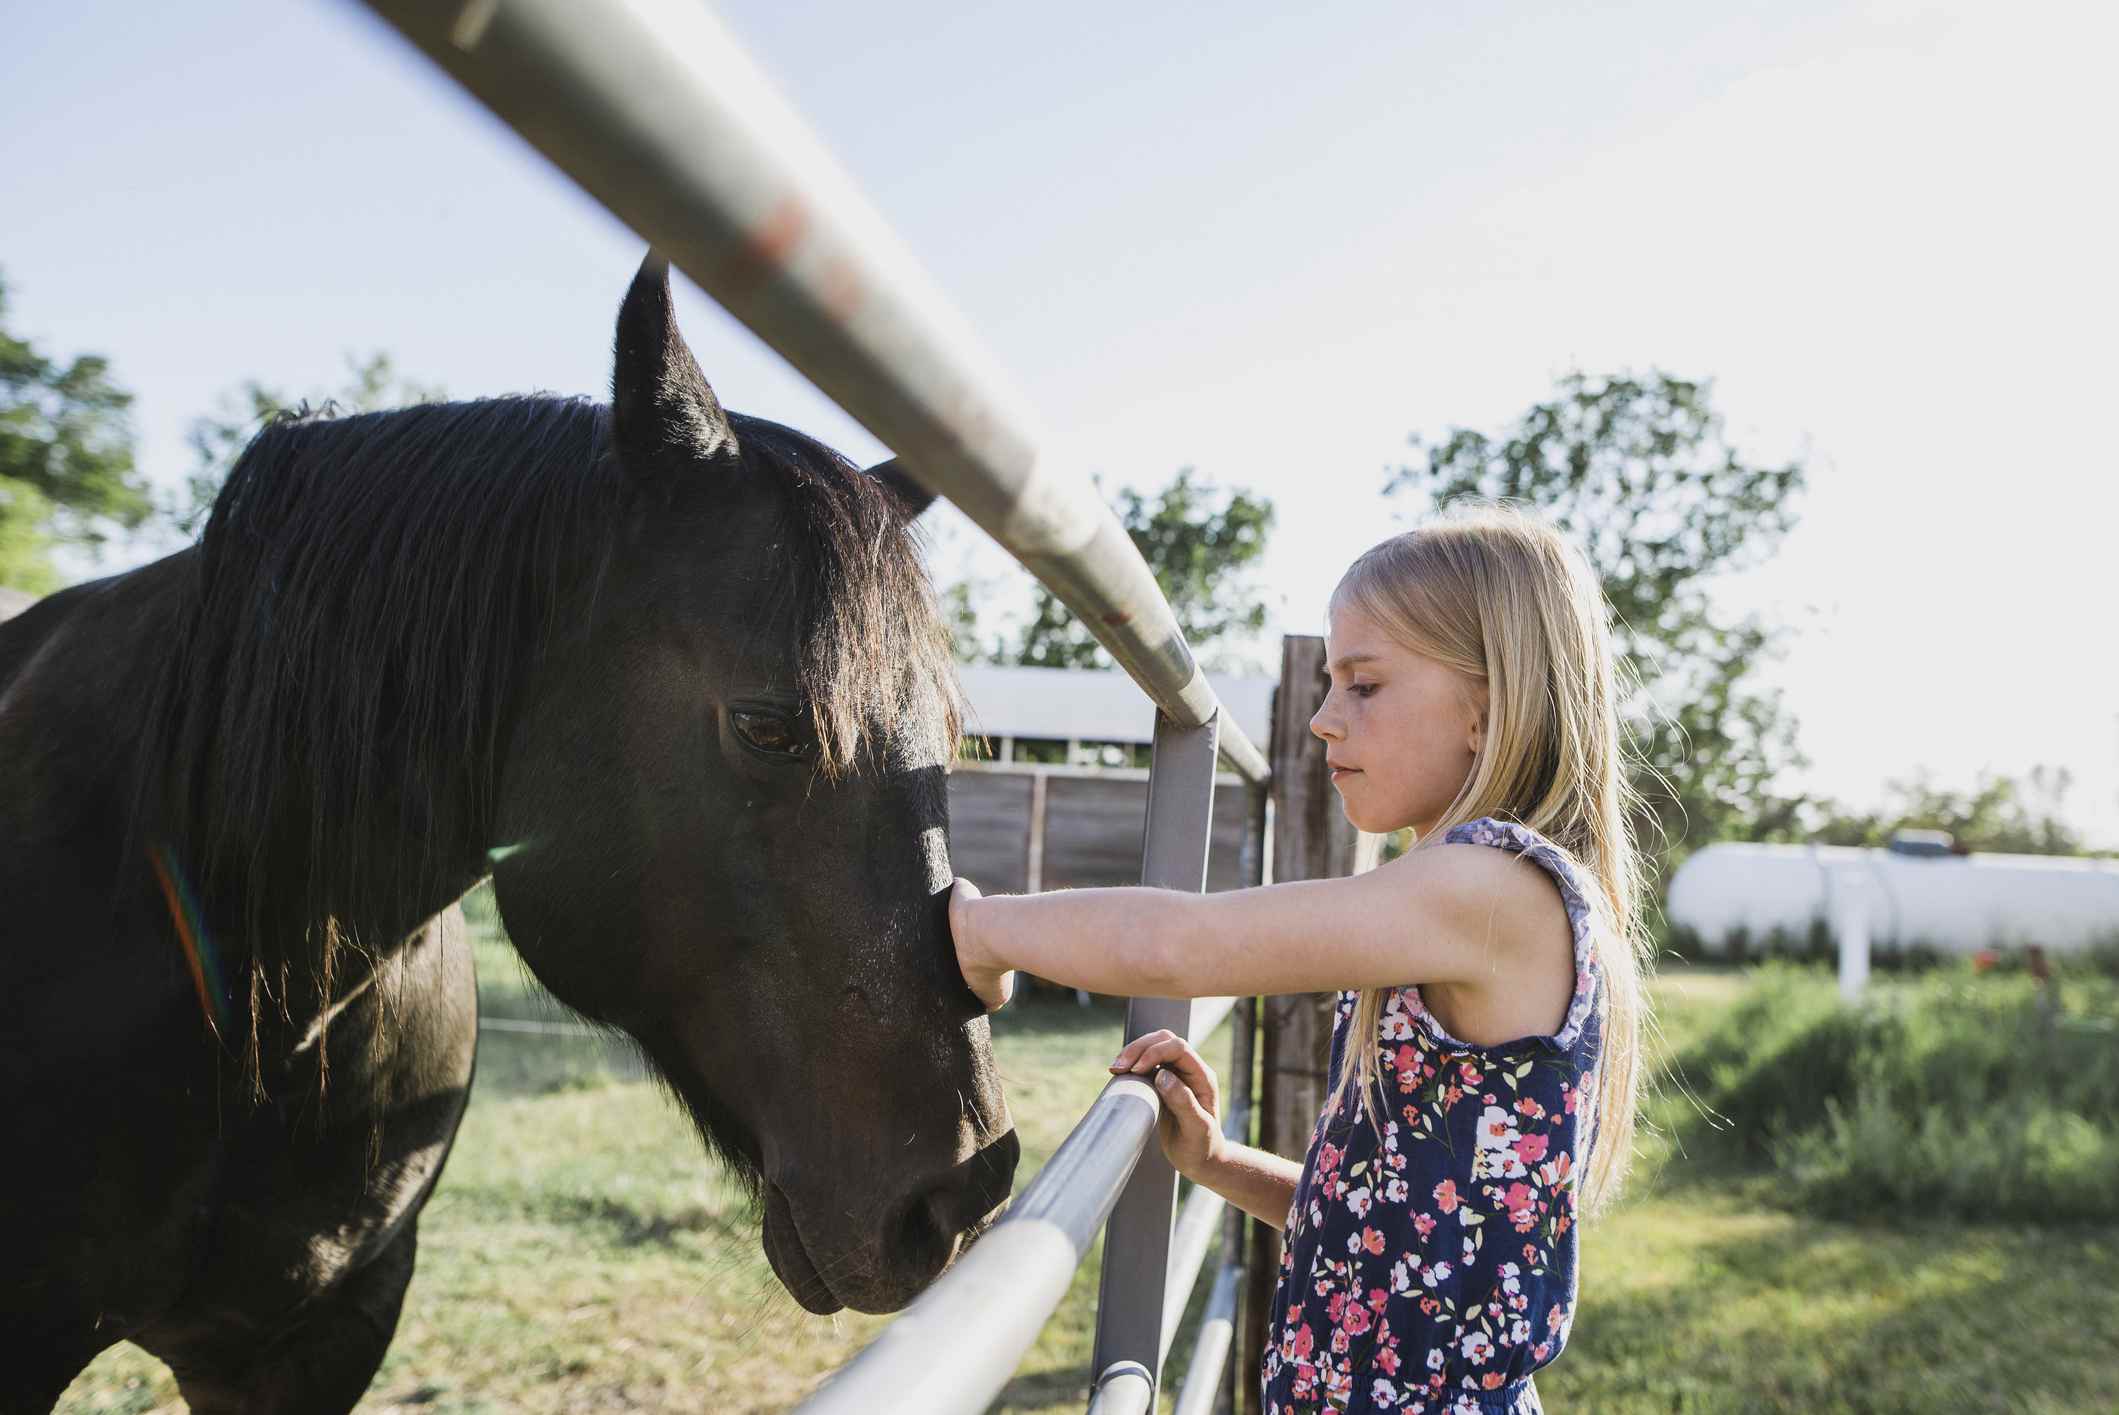 Girl petting horse through fence